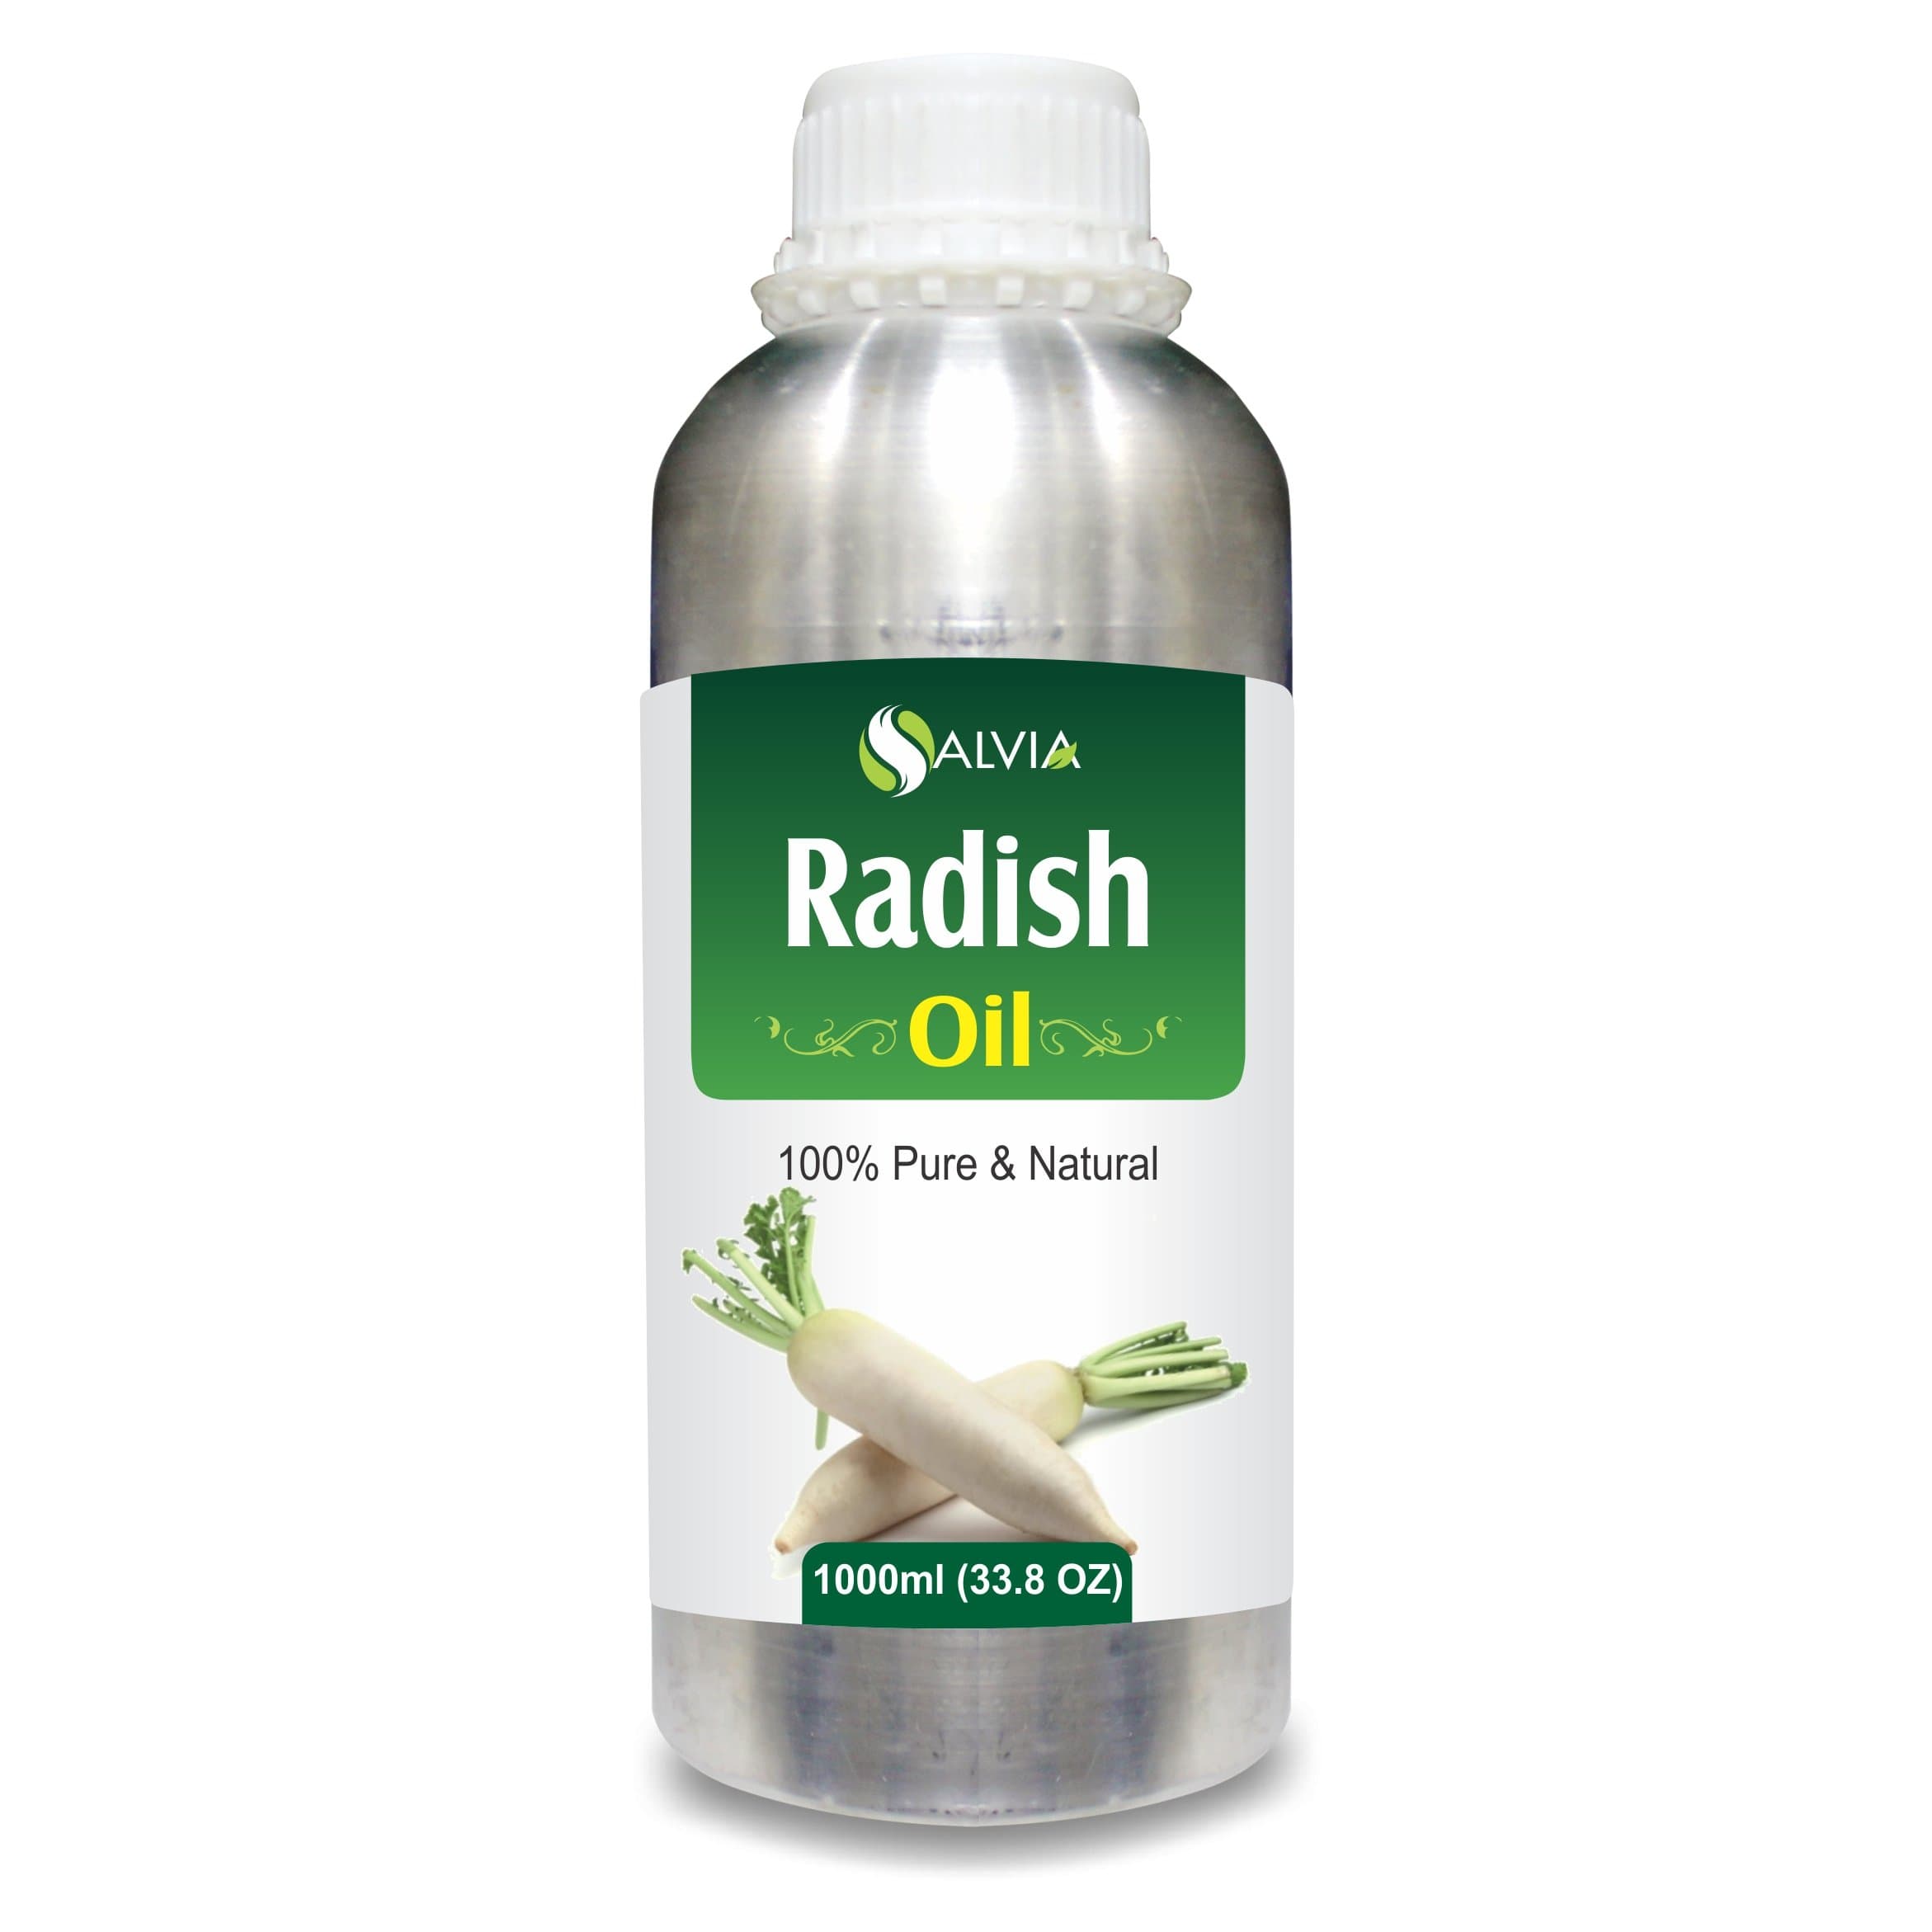 Radish Oil